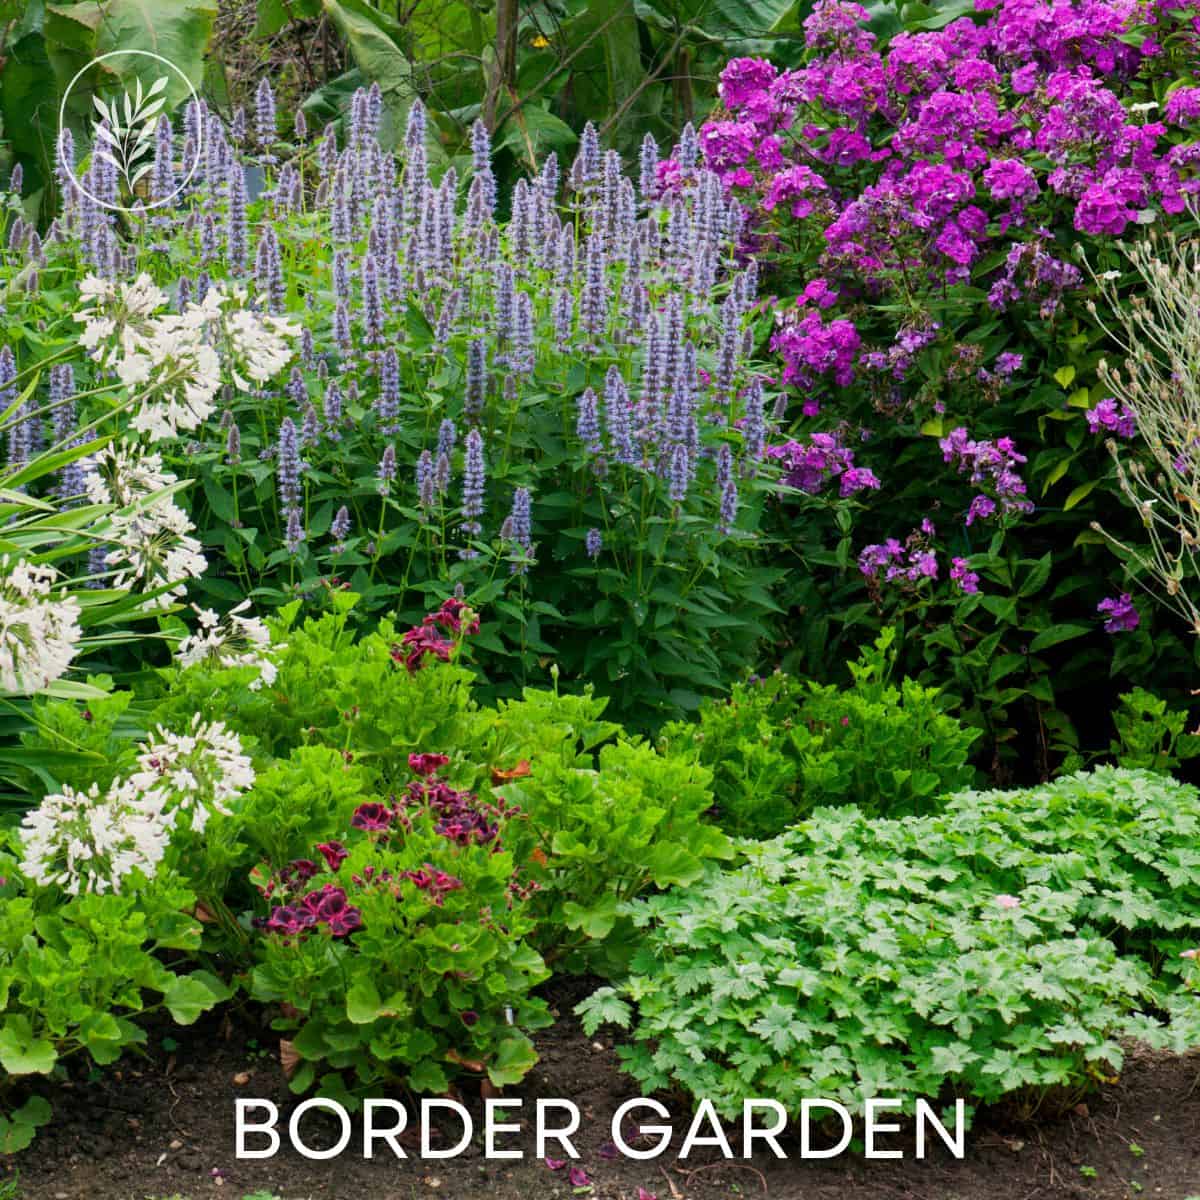 Border garden via @home4theharvest